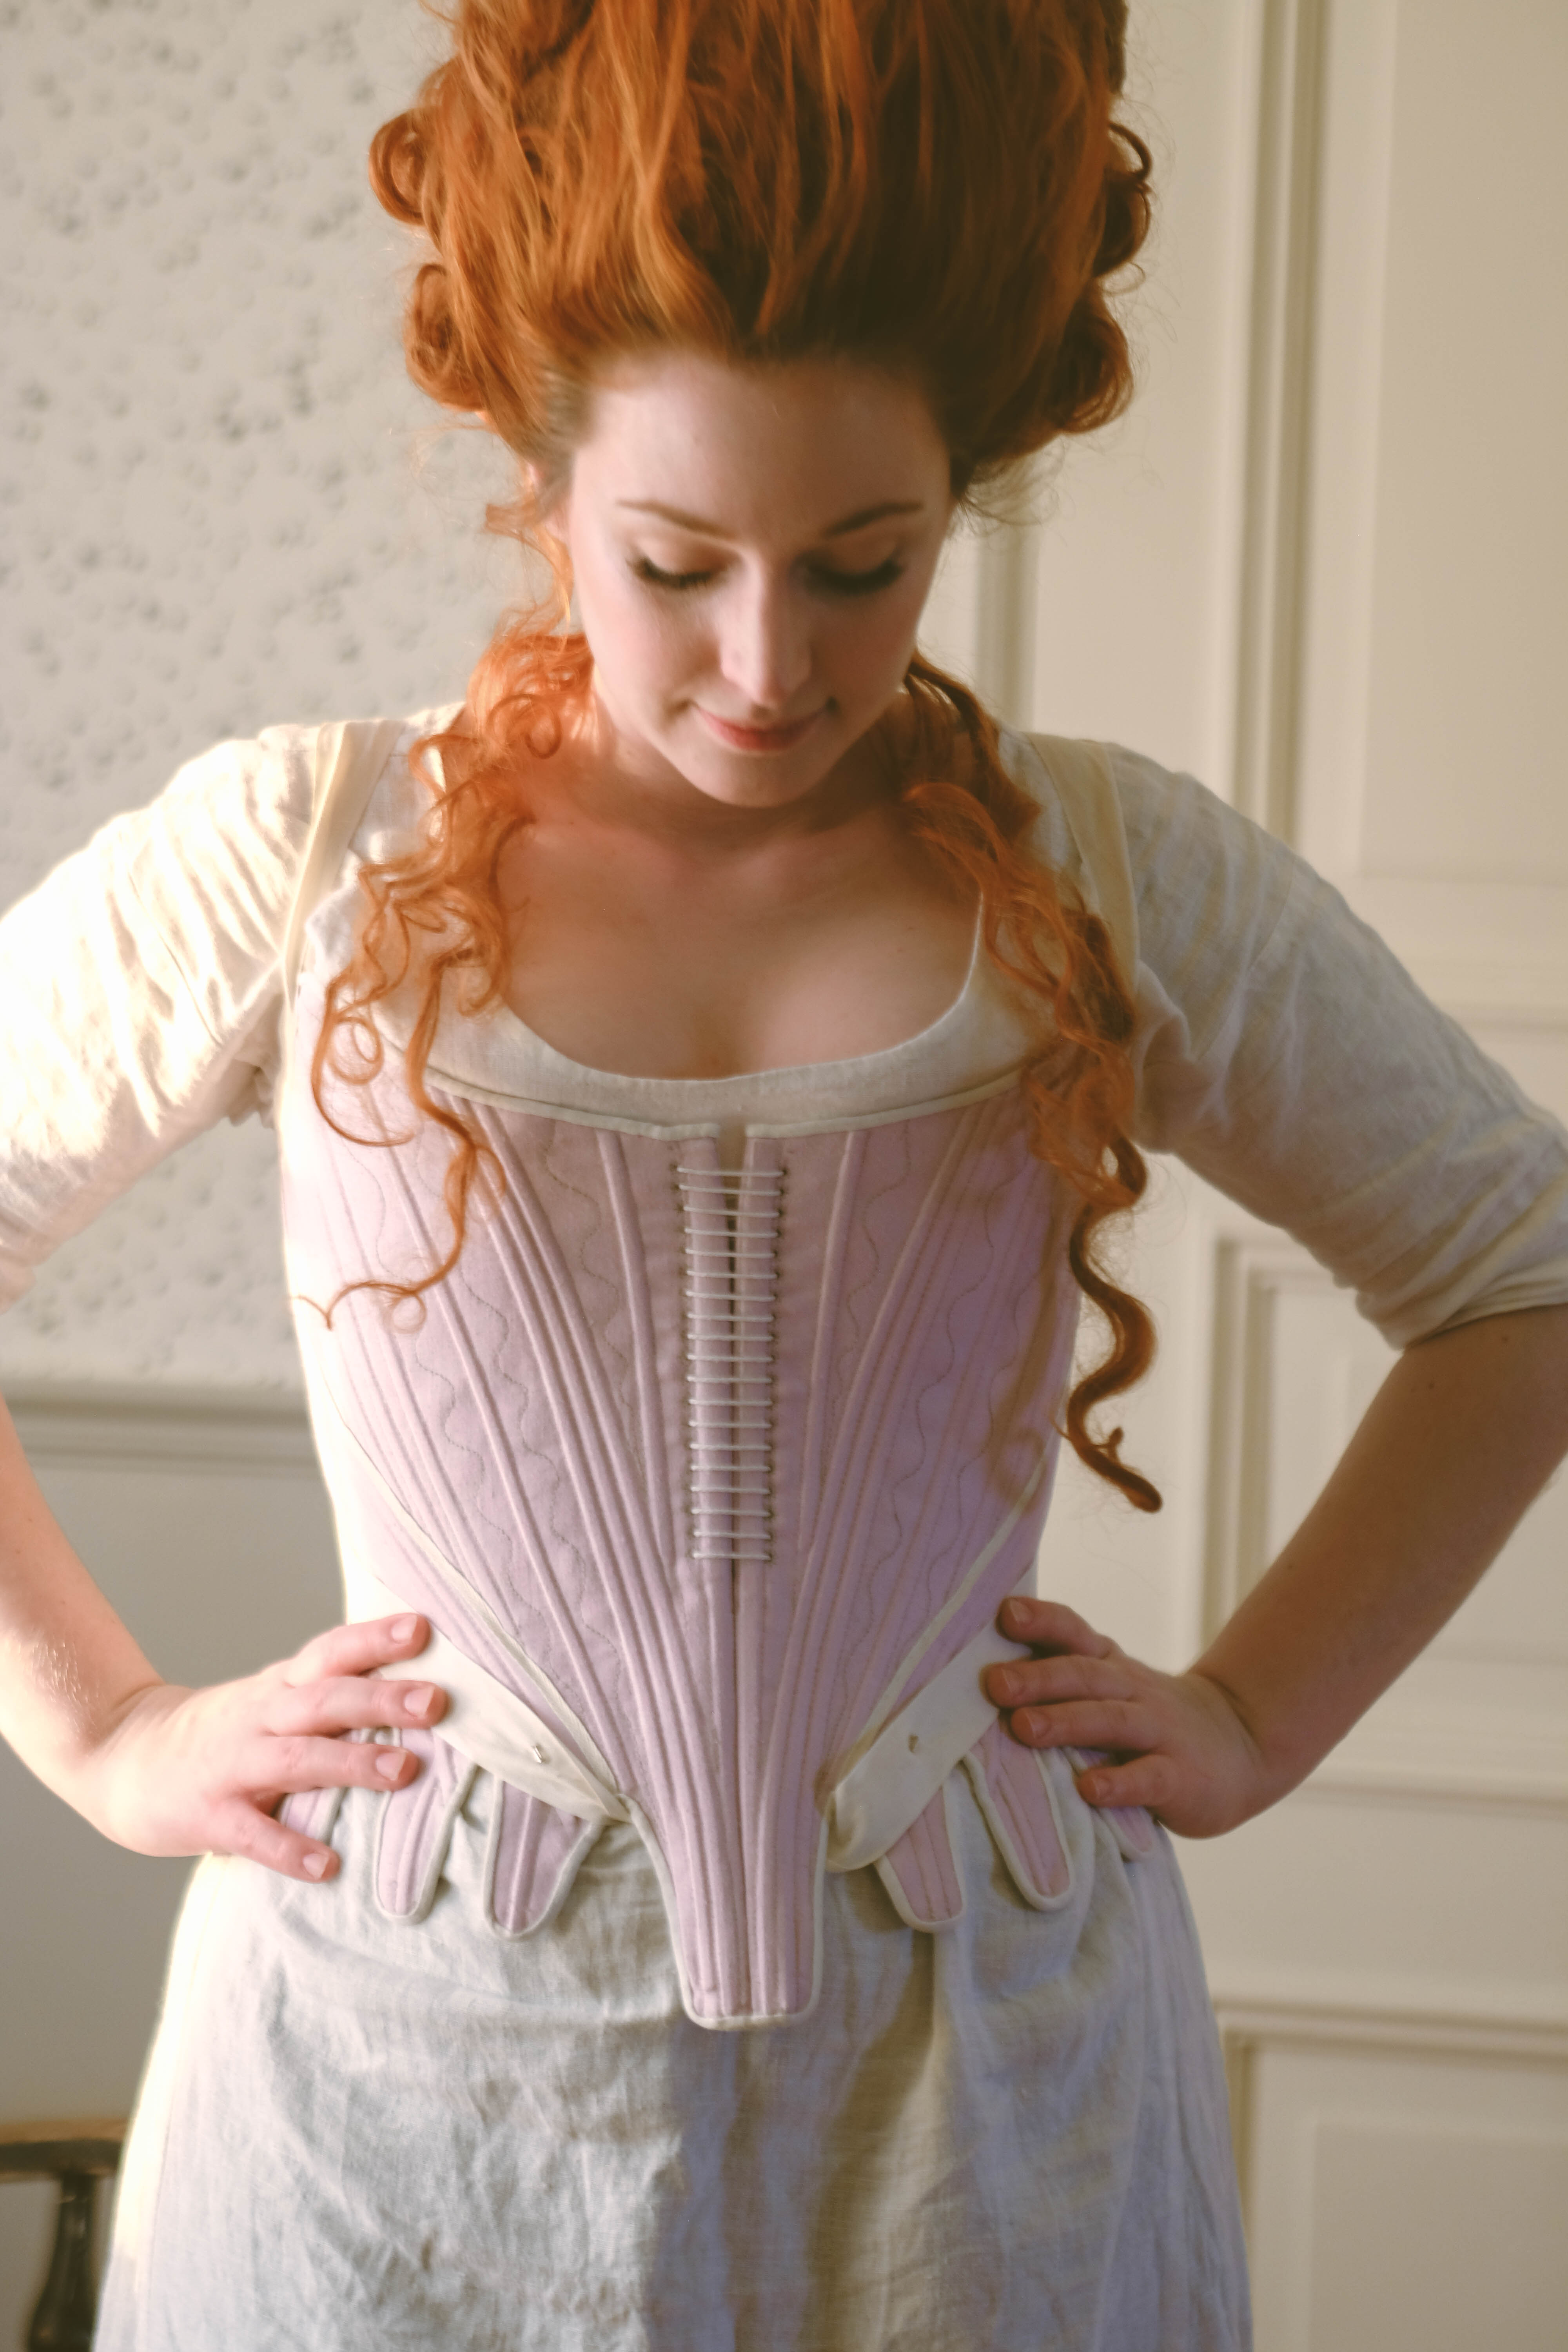 Sewing pattern- 18th century Stays Freja